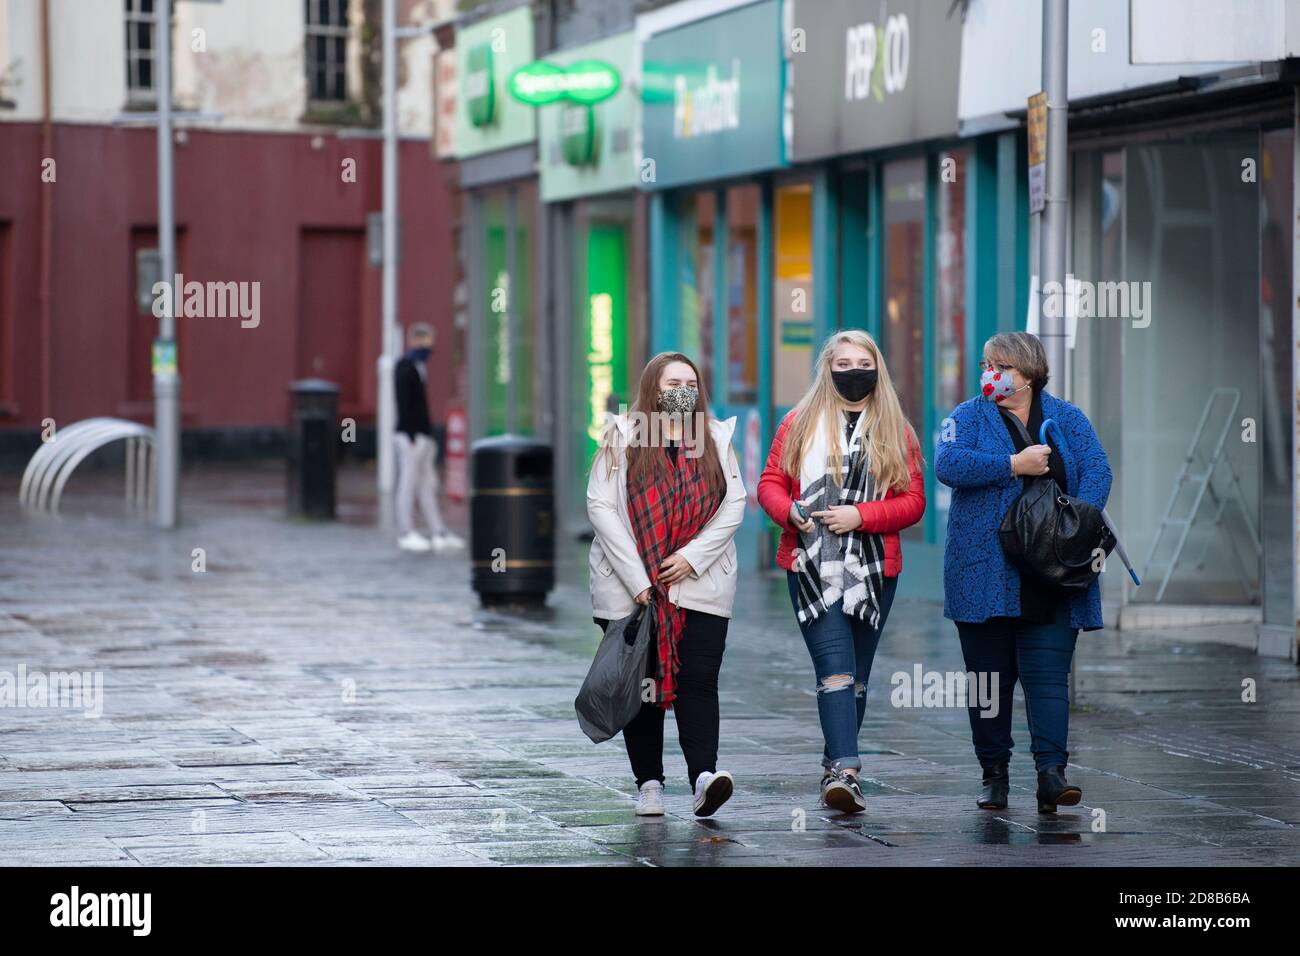 BRIDGEND, WALES - OCTOBER 28: Three women walk through the town centre ...